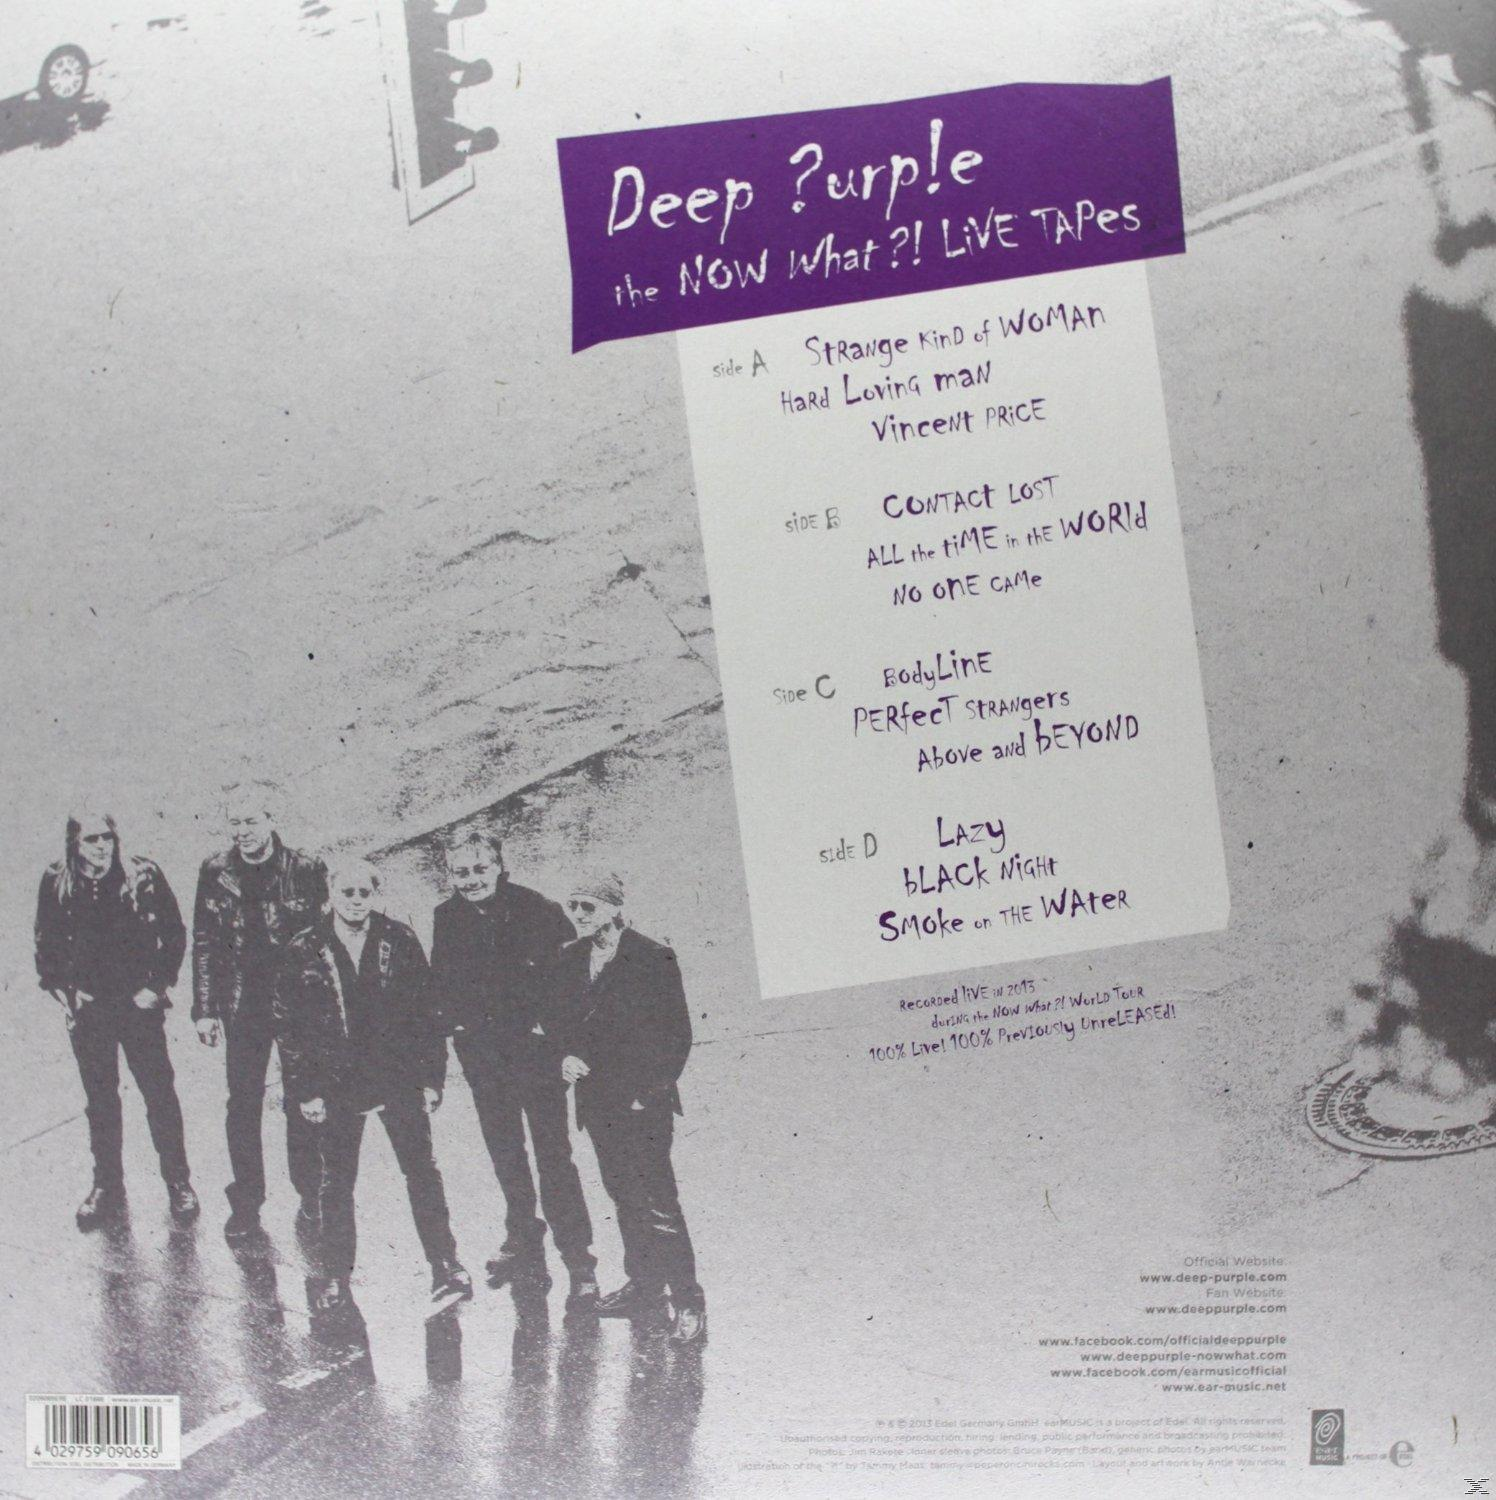 Deep Purple - NOW WHAT?! (GOLD - EDITION) (Vinyl)